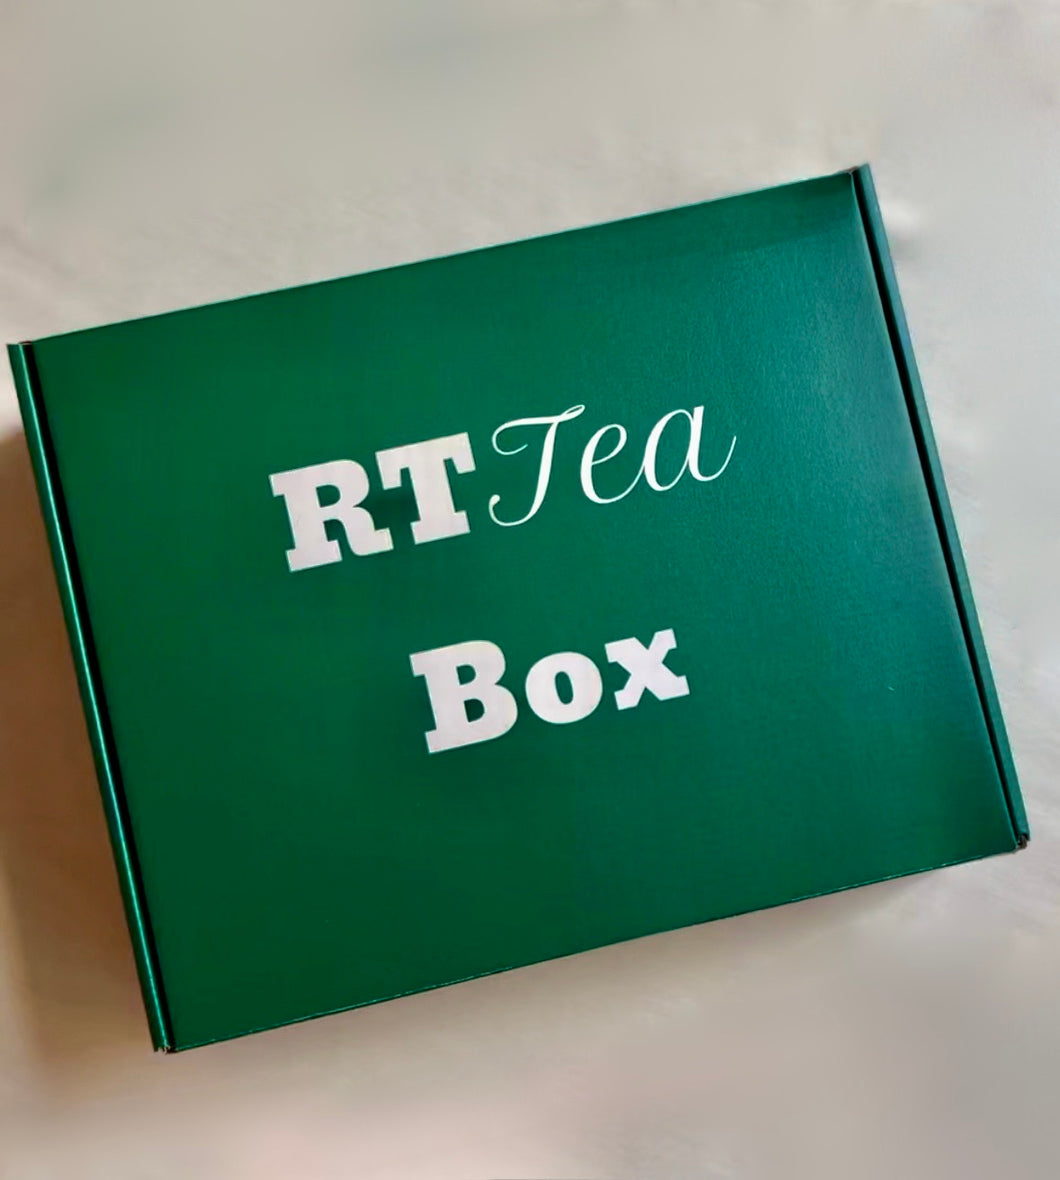 RTTea Box